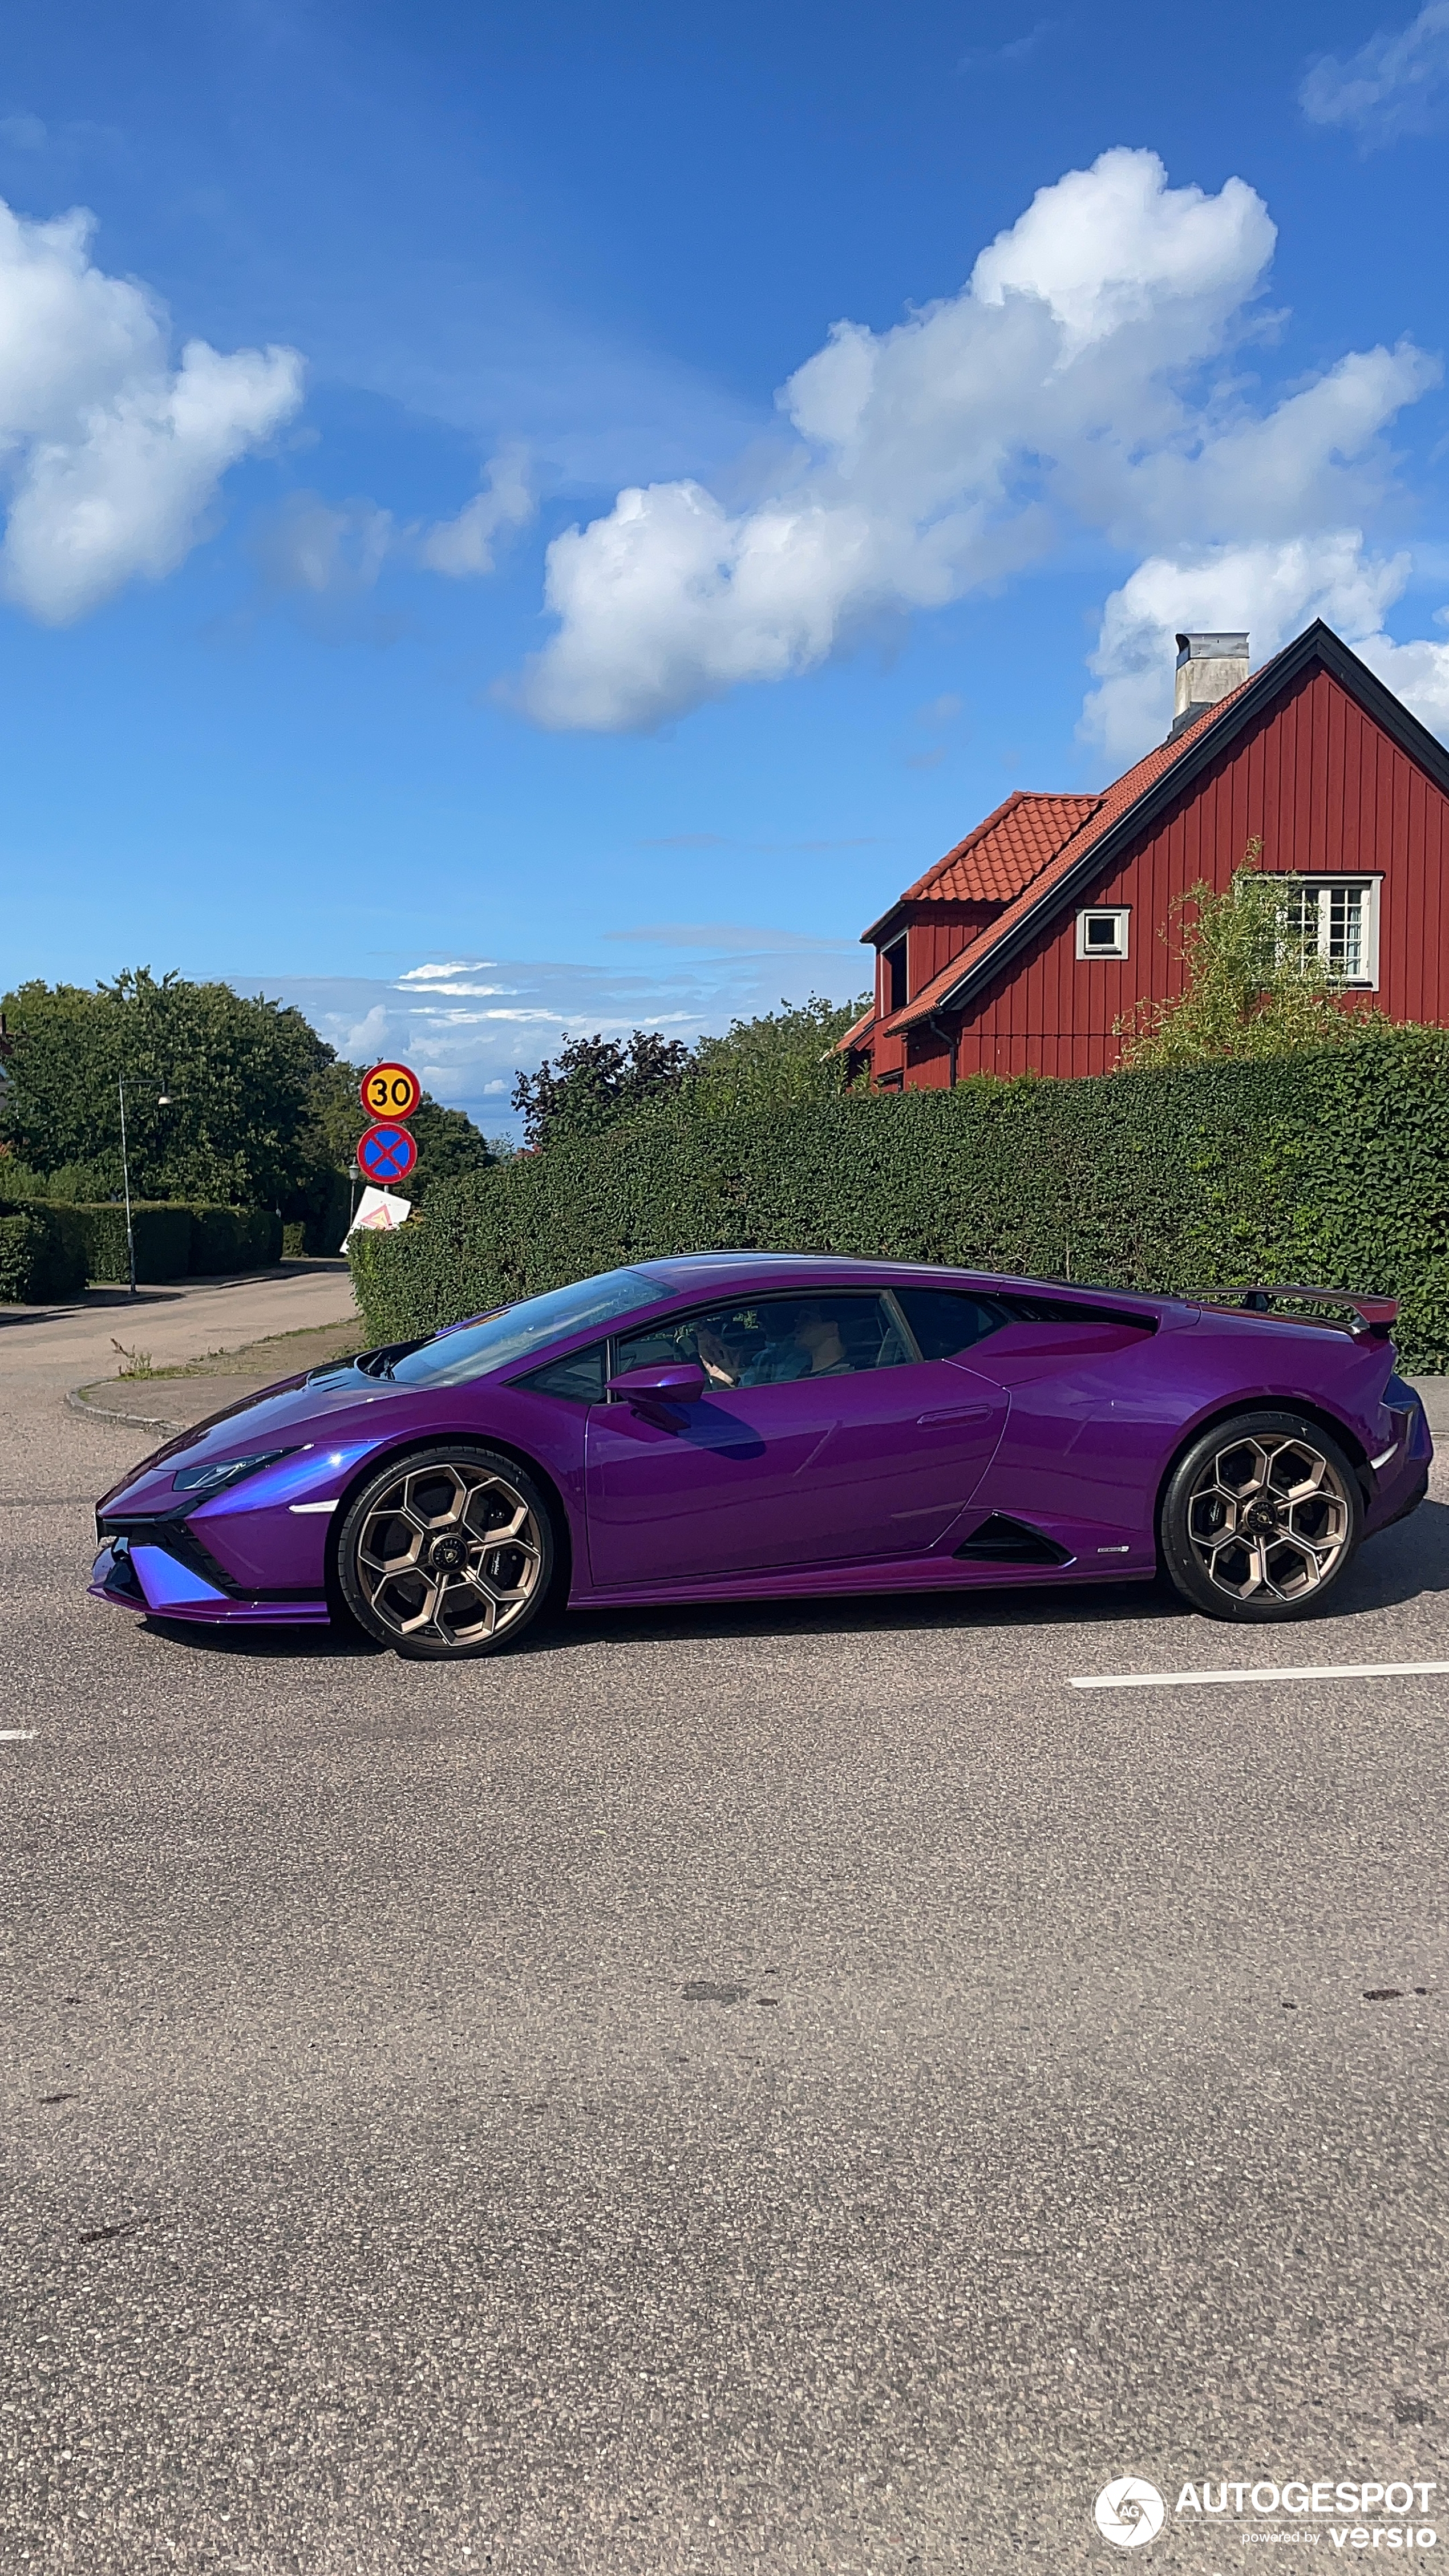 A purple Huracán Tecnica shows up in Båstad